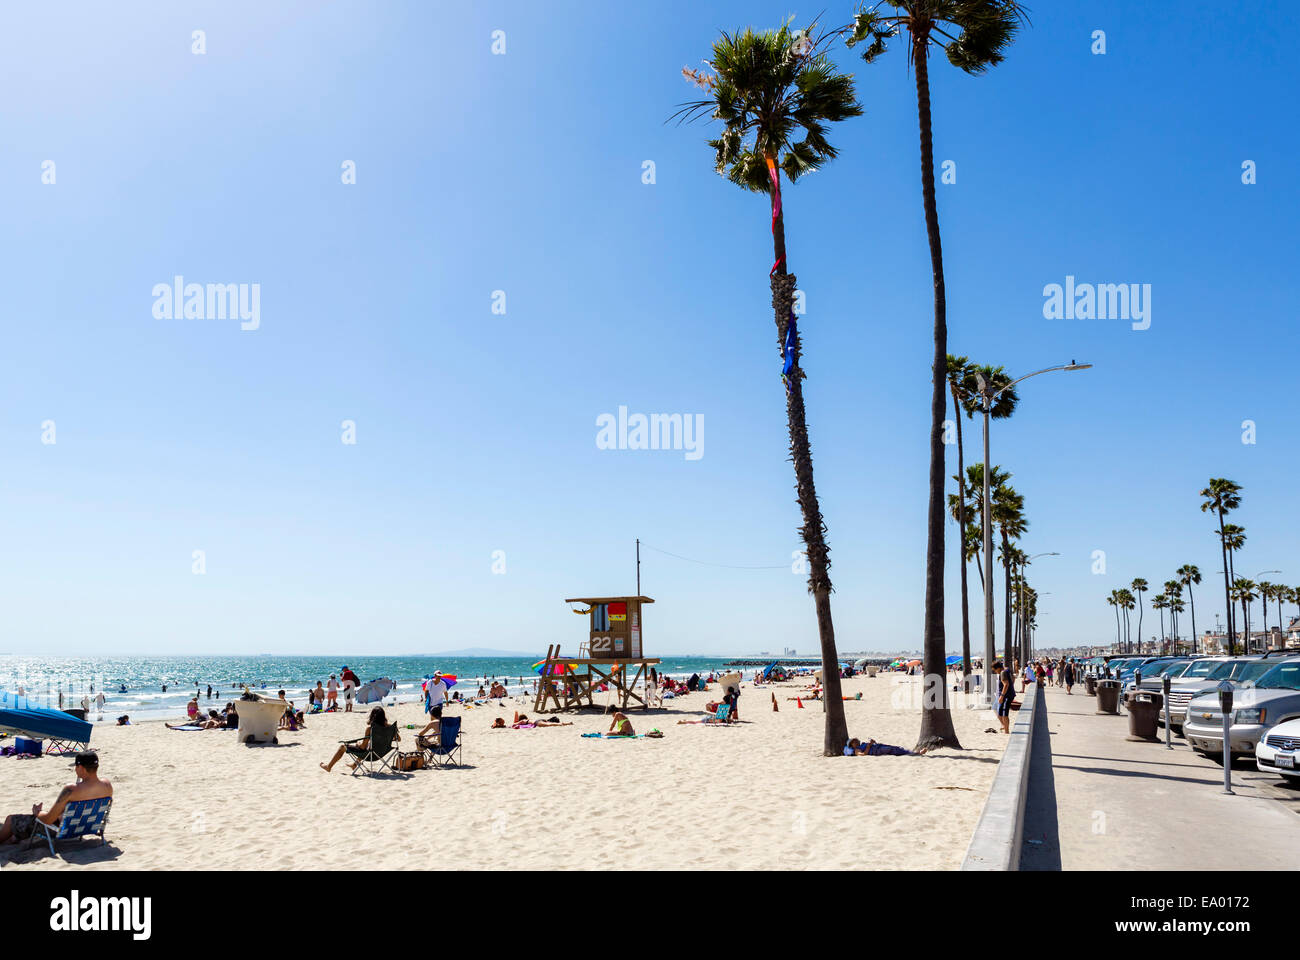 The beach and seafront promenade near the pier, Balboa Peninsula, Newport Beach, Orange County, California, USA Stock Photo